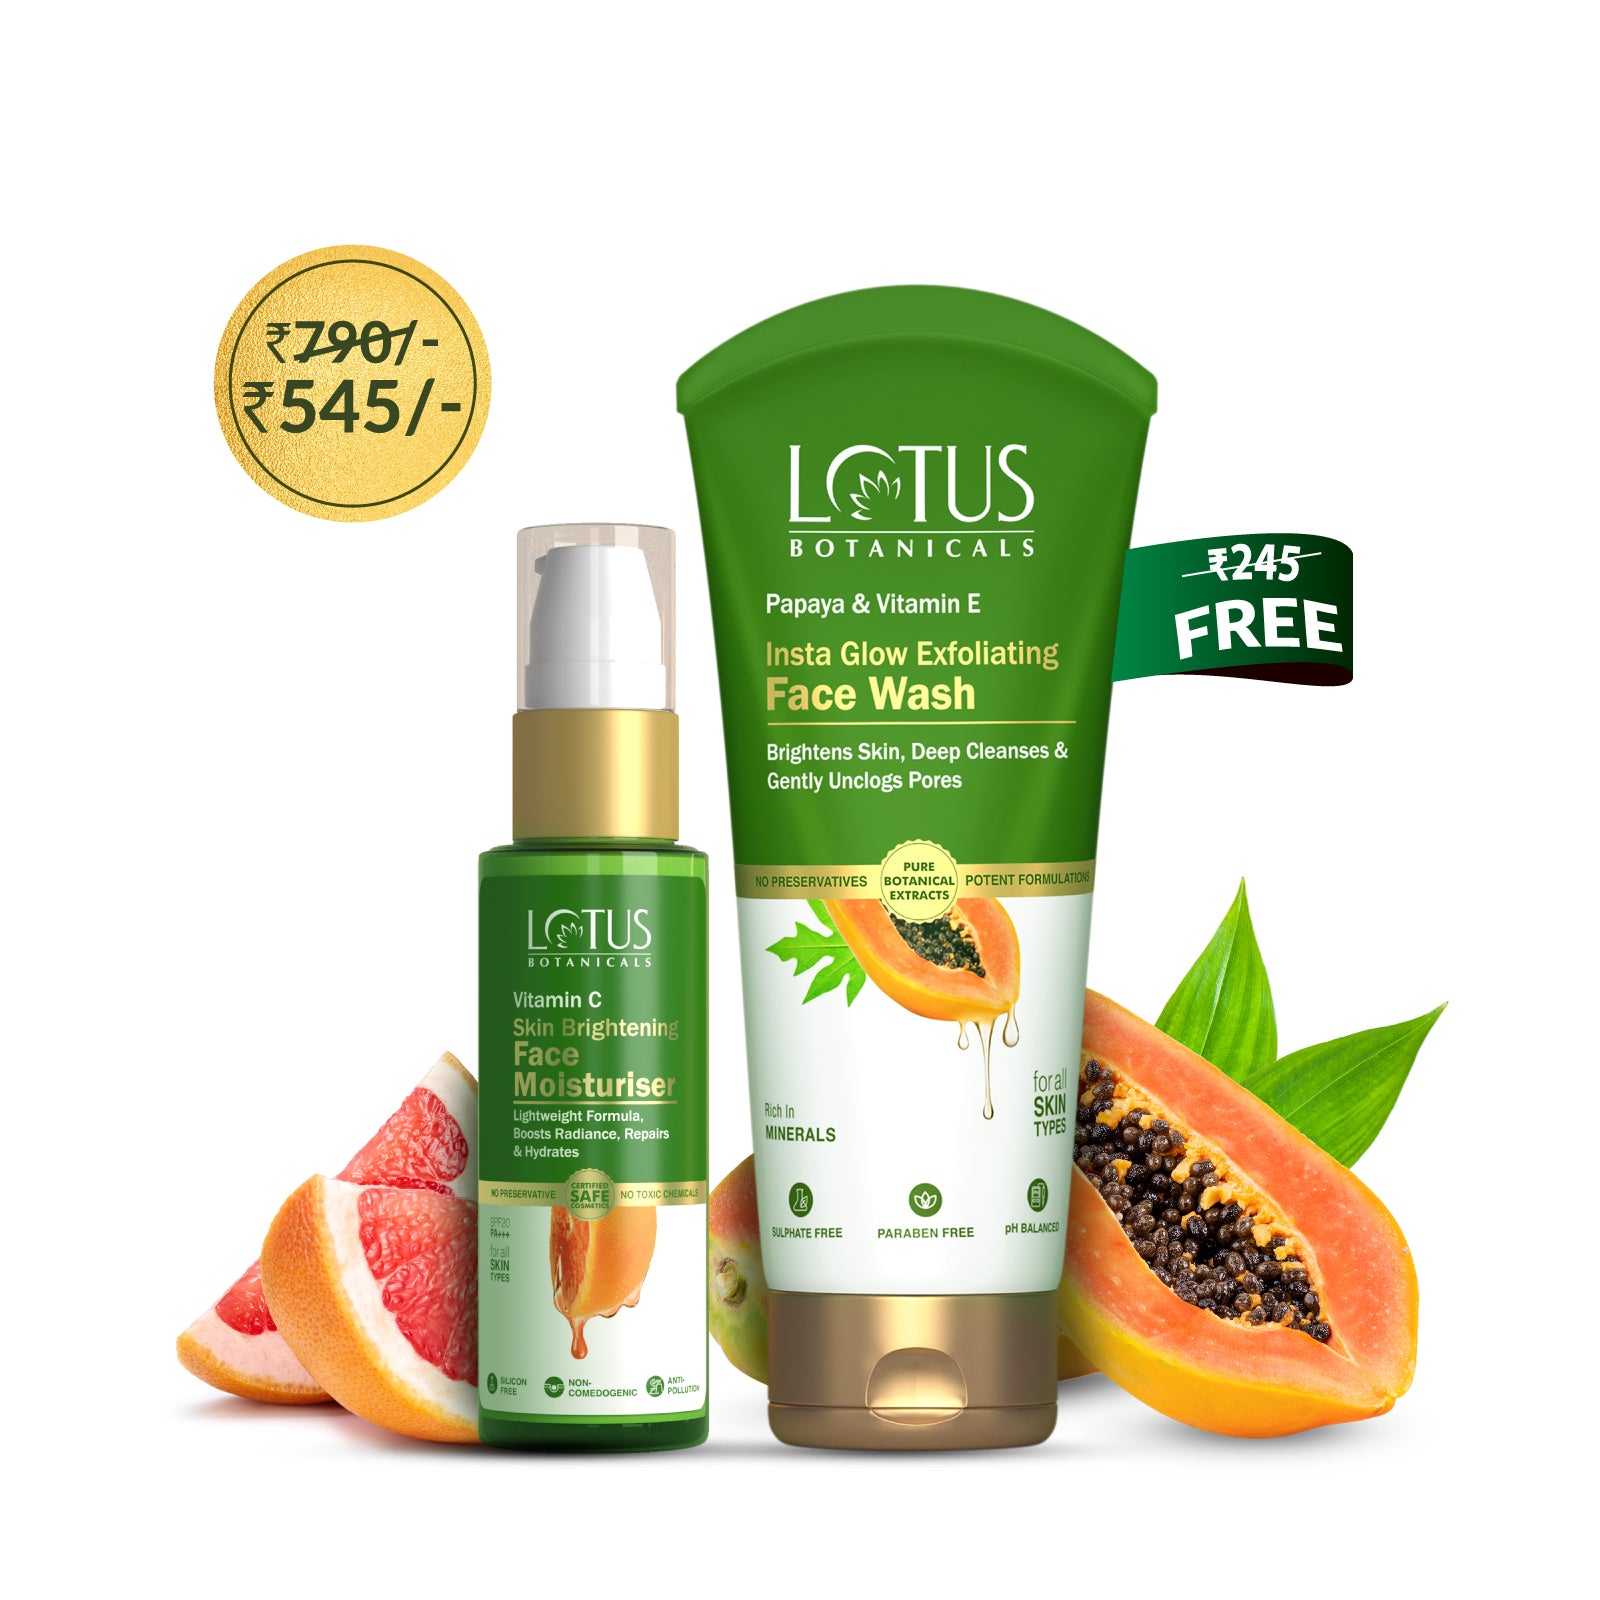 Buy Vitamin C Moisturiser, Get Papaya Face Wash Free